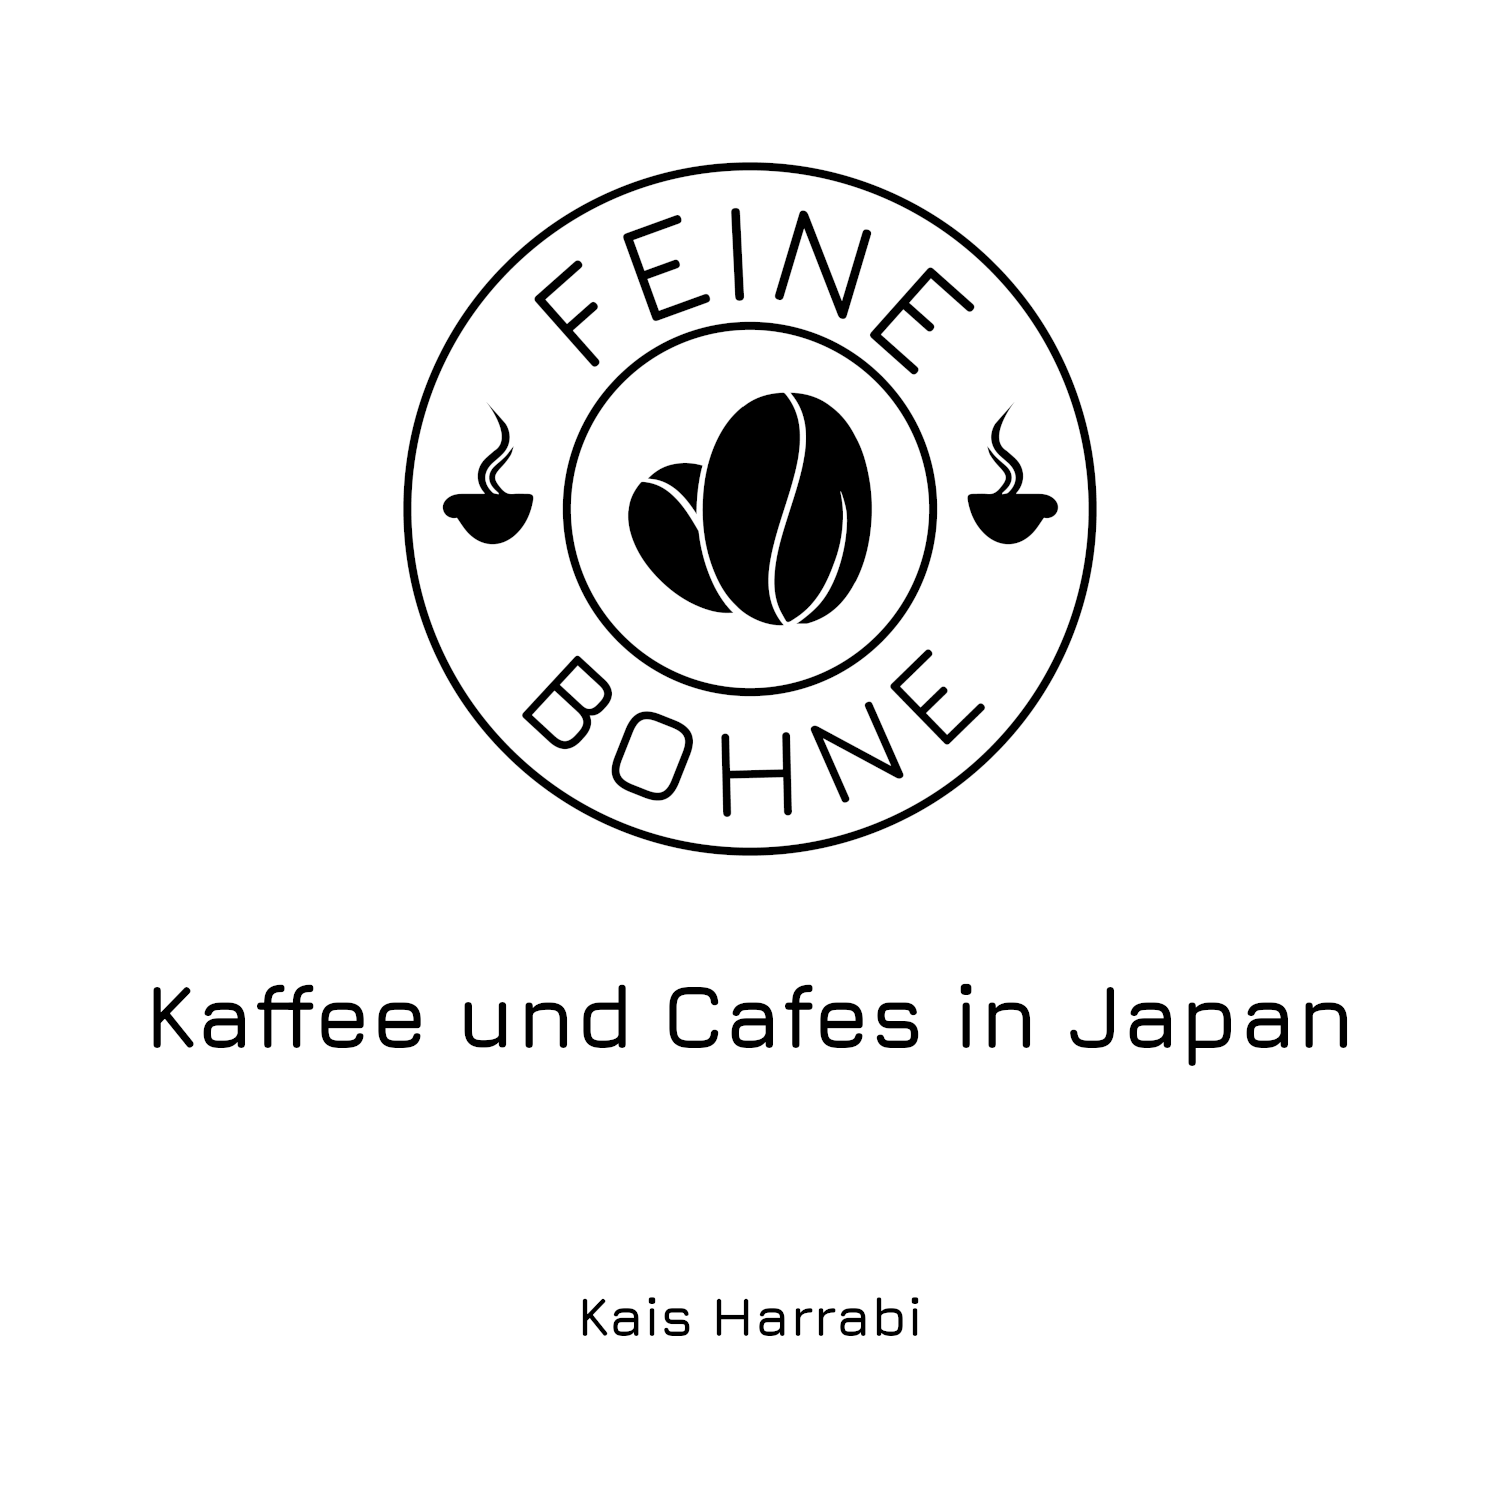 #21 Kaffee und Cafes in Japan | Kais Harrabi